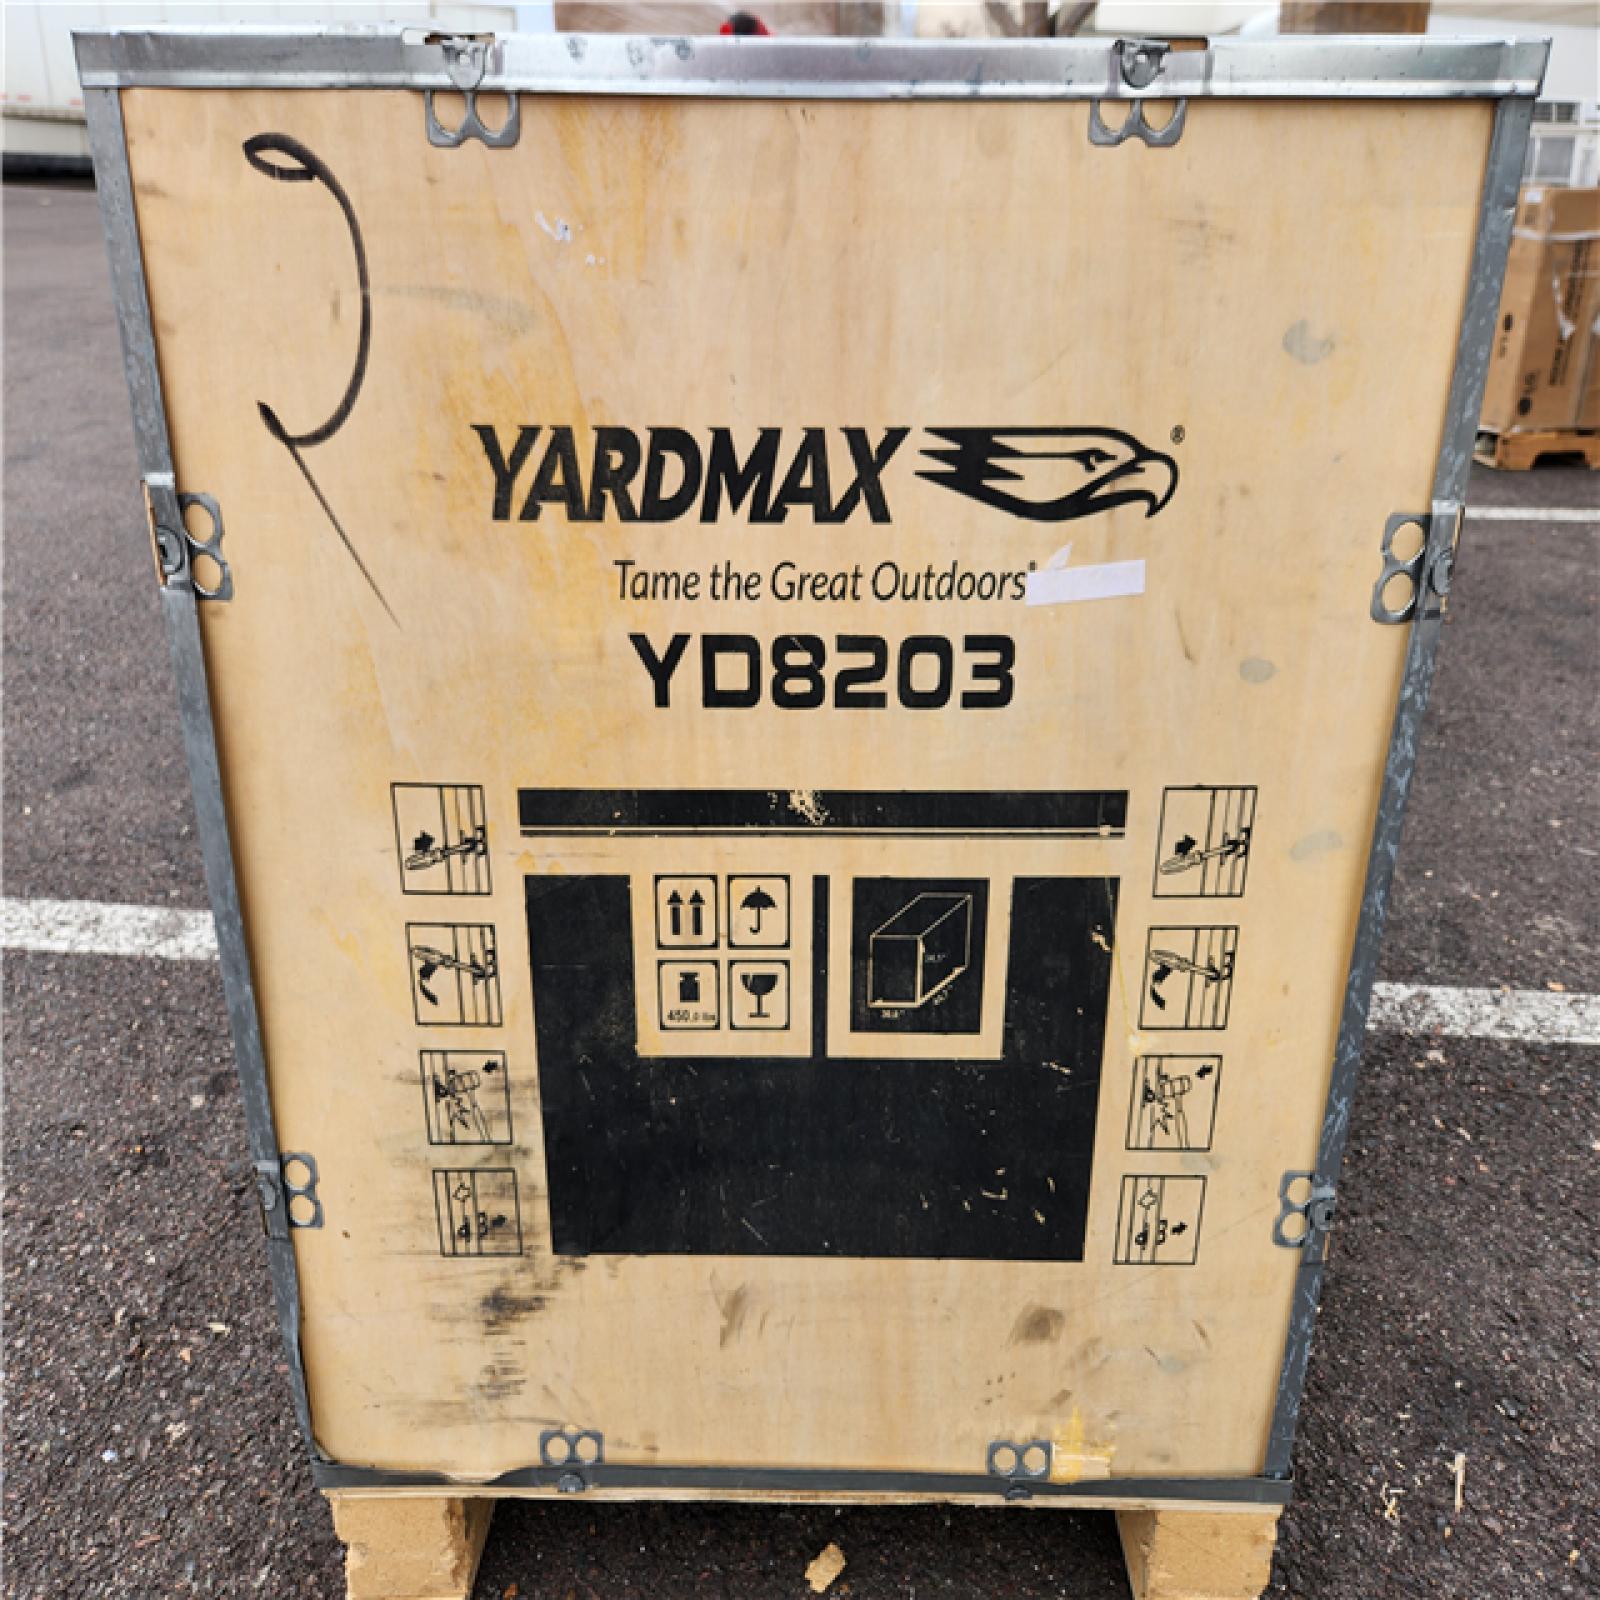 Phoenix Location NEW YARDMAX YD8203 Track Barrow - Flatbed, 660lb. Capacity, Briggs CR950, 6.5 hp, 208cc